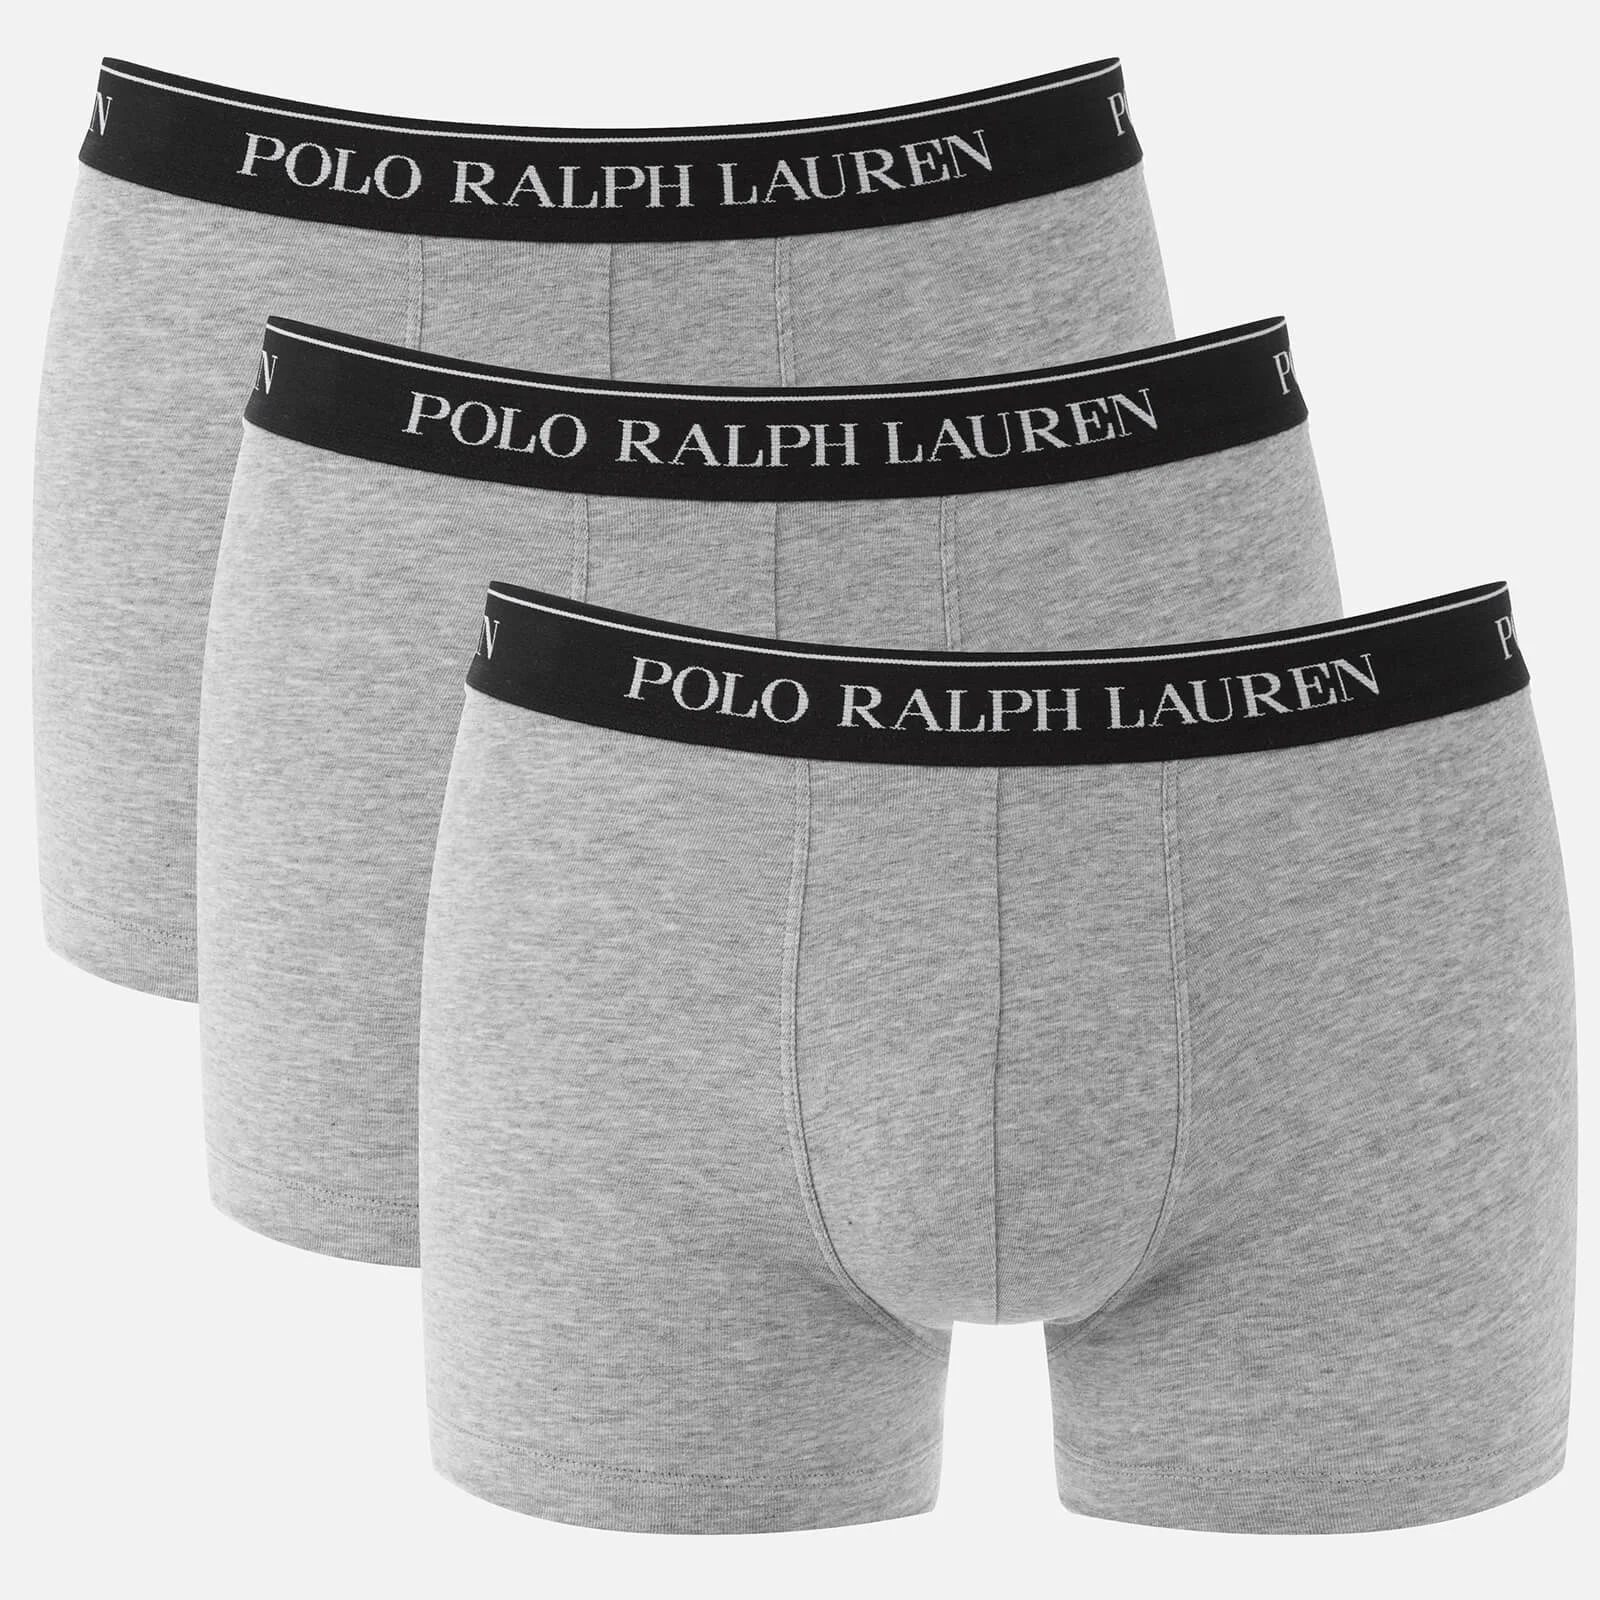 Polo Ralph Lauren Men's 3-Pack Cotton Trunks - Andover Heather Image 1